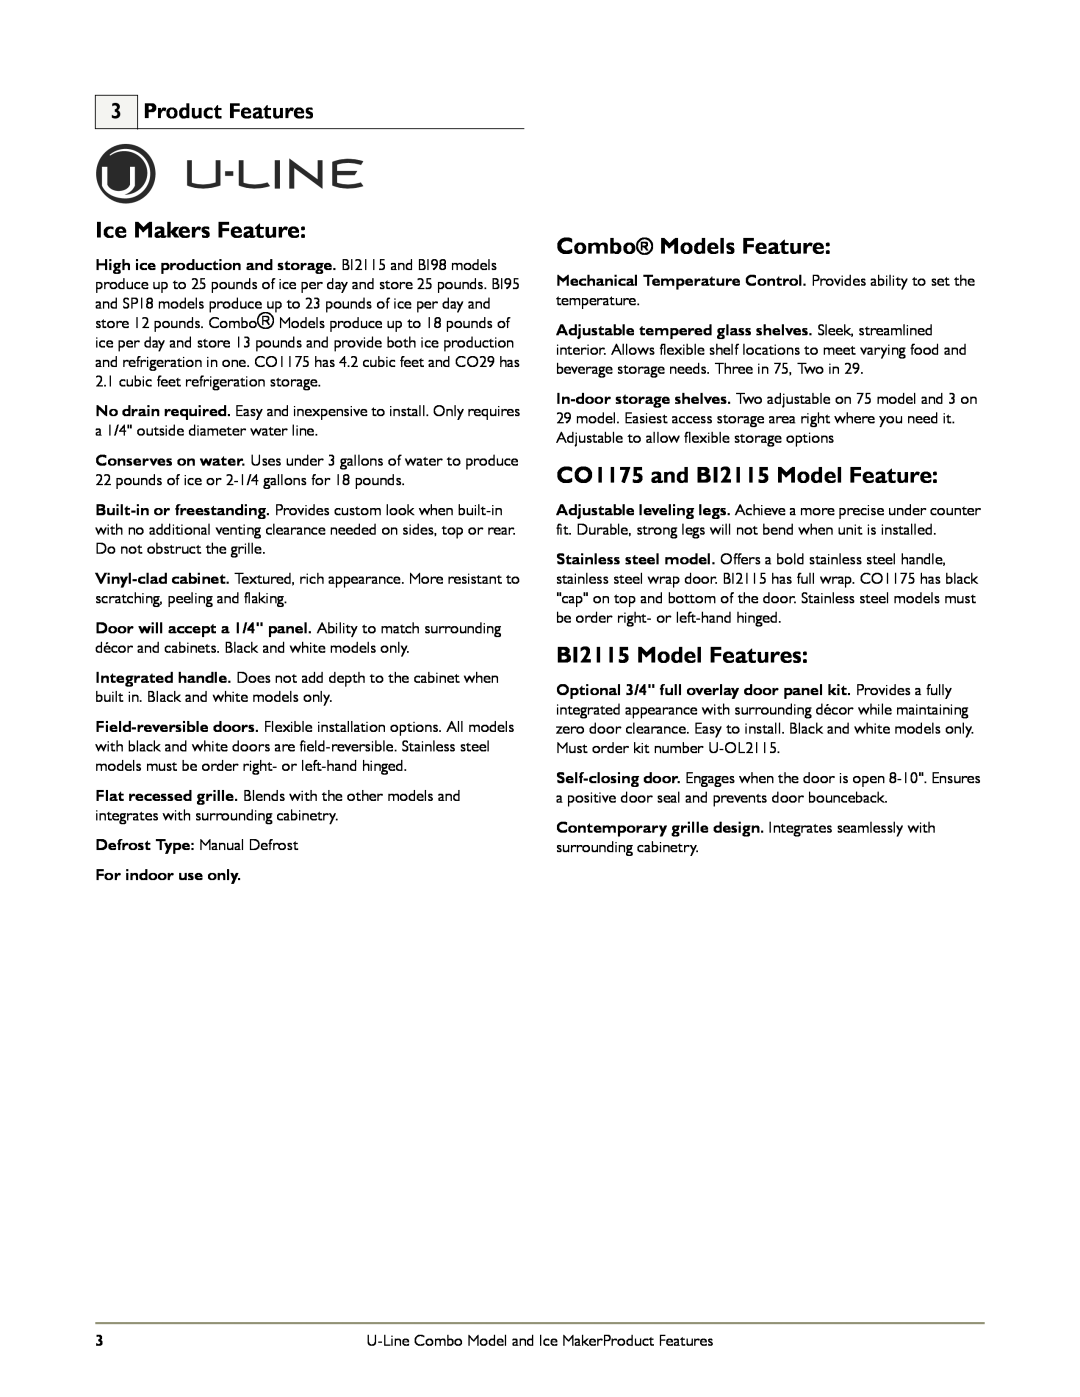 U-Line SP18 manual Ice Makers Feature, Combo Models Feature, CO1175 and BI2115 Model Feature, BI2115 Model Features 